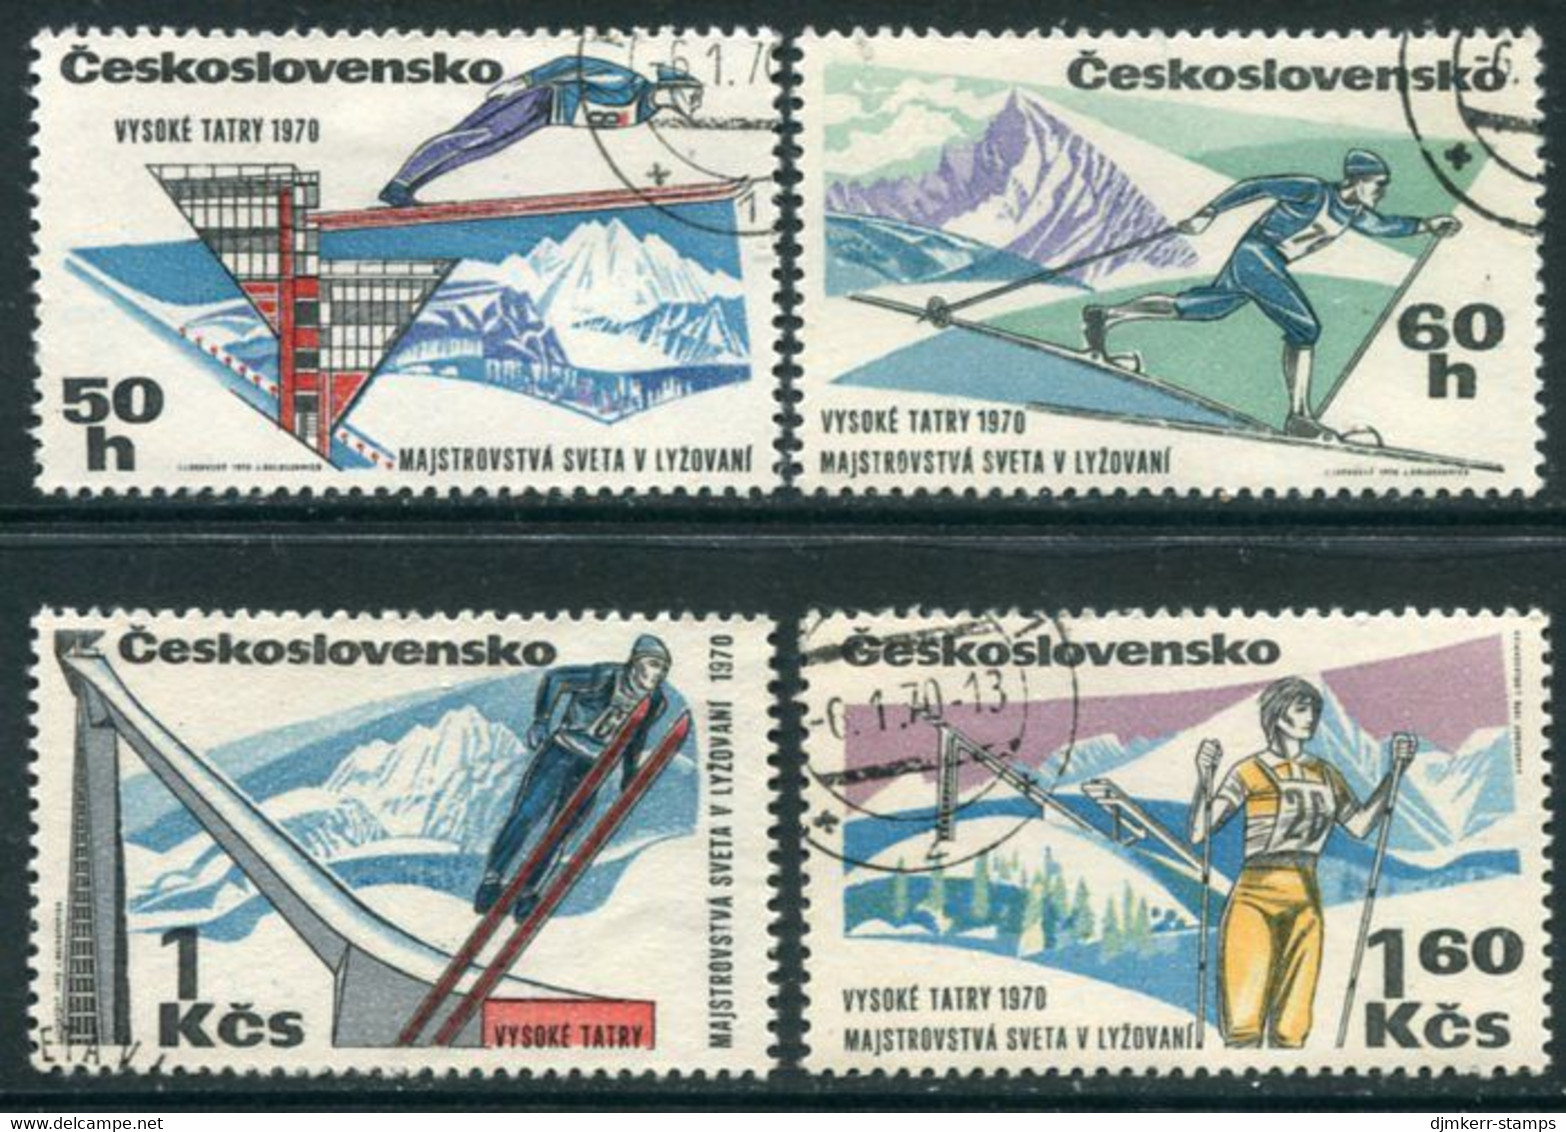 CZECHOSLOVAKIA 1970 Skiing World Championship Used Michel 1916-18 - Gebraucht